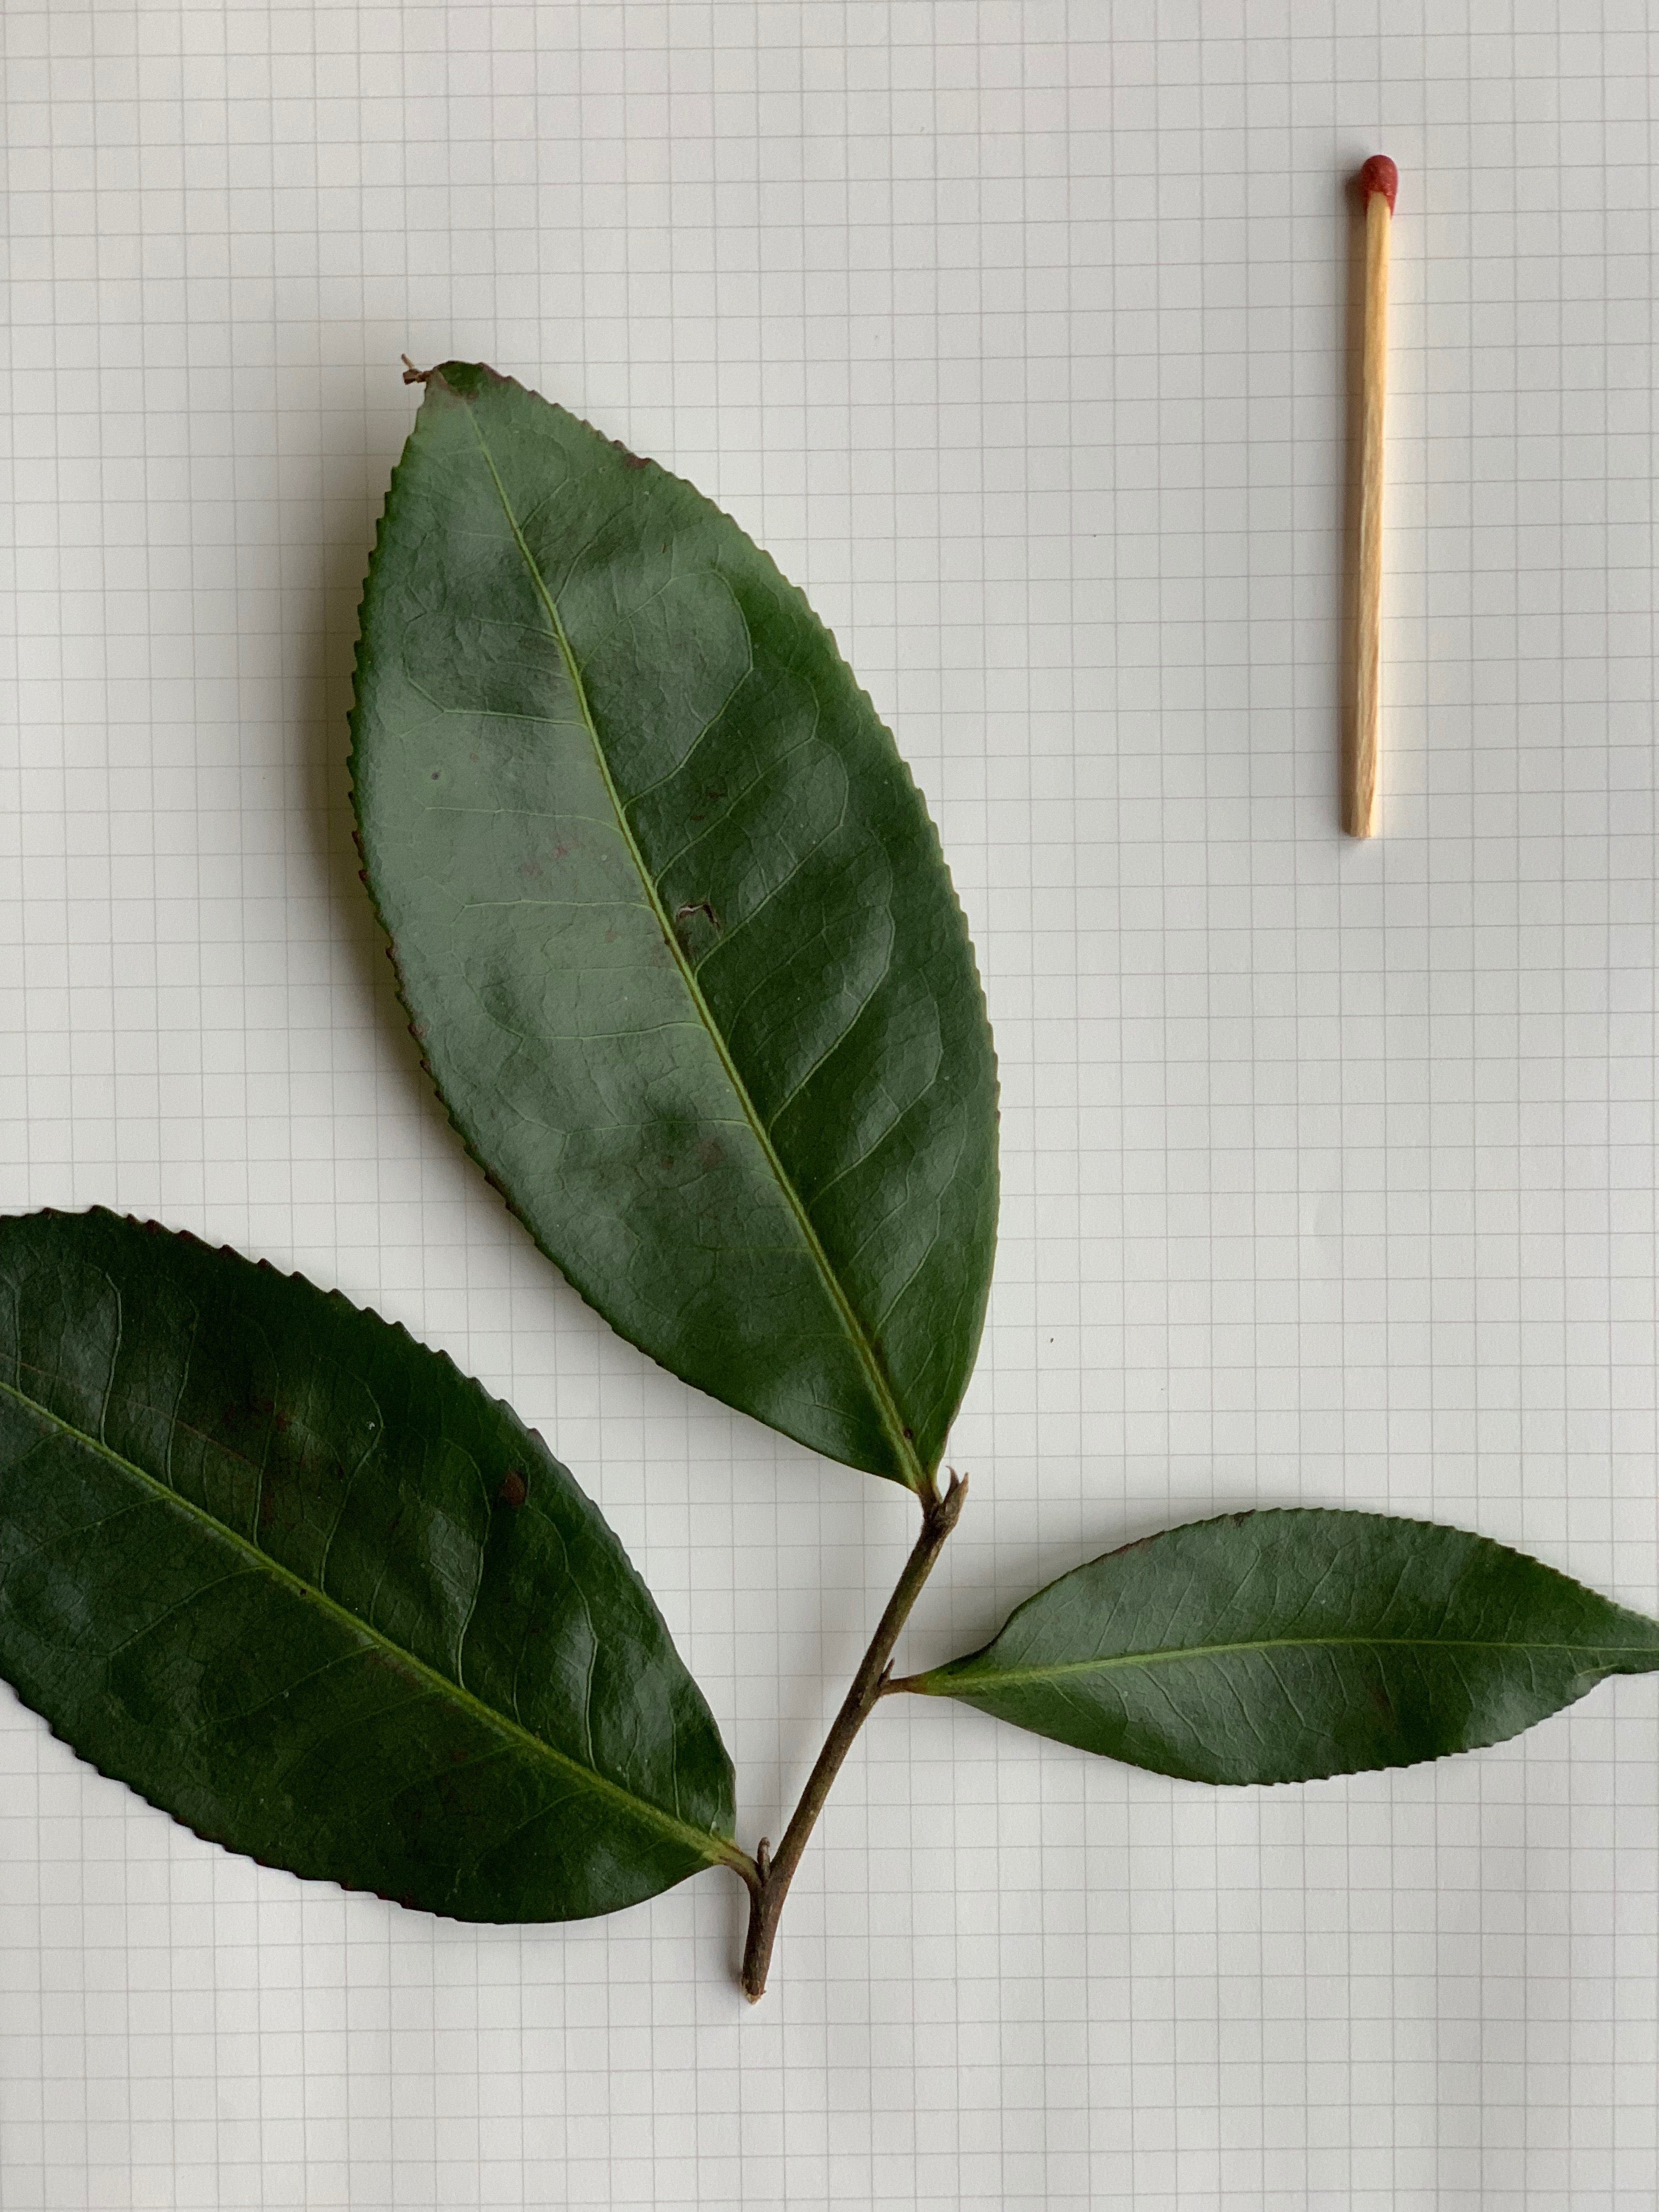 assamica leaf comparison with match stick